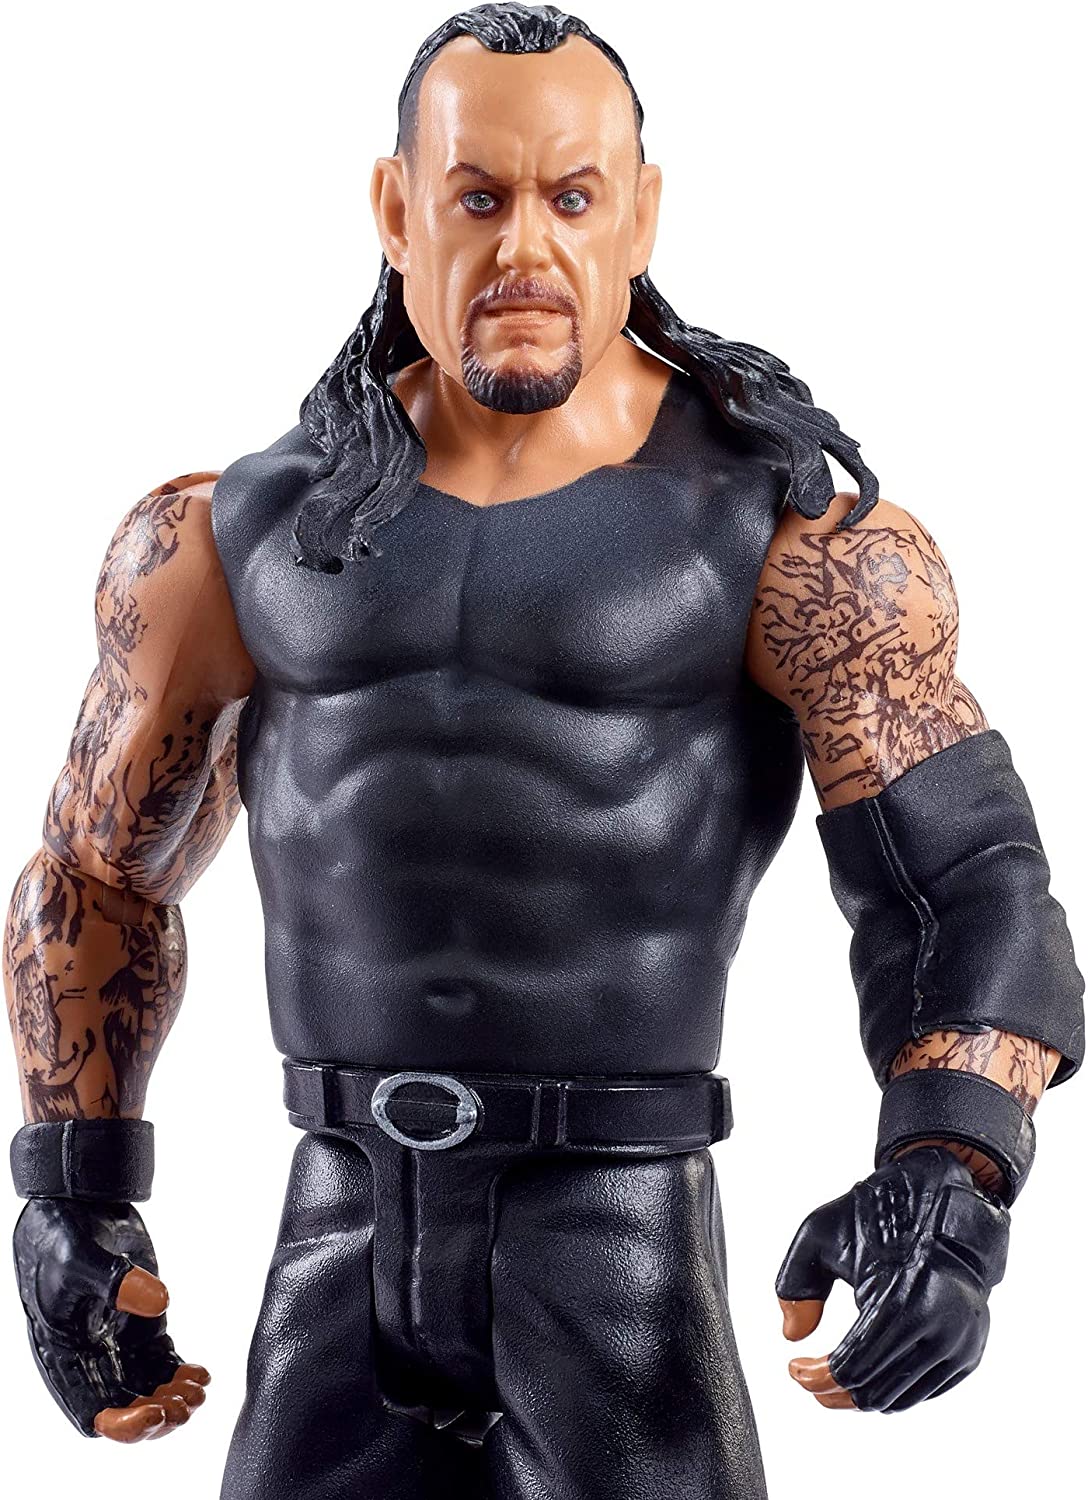 2021 WWE Mattel Basic Series 117 Undertaker